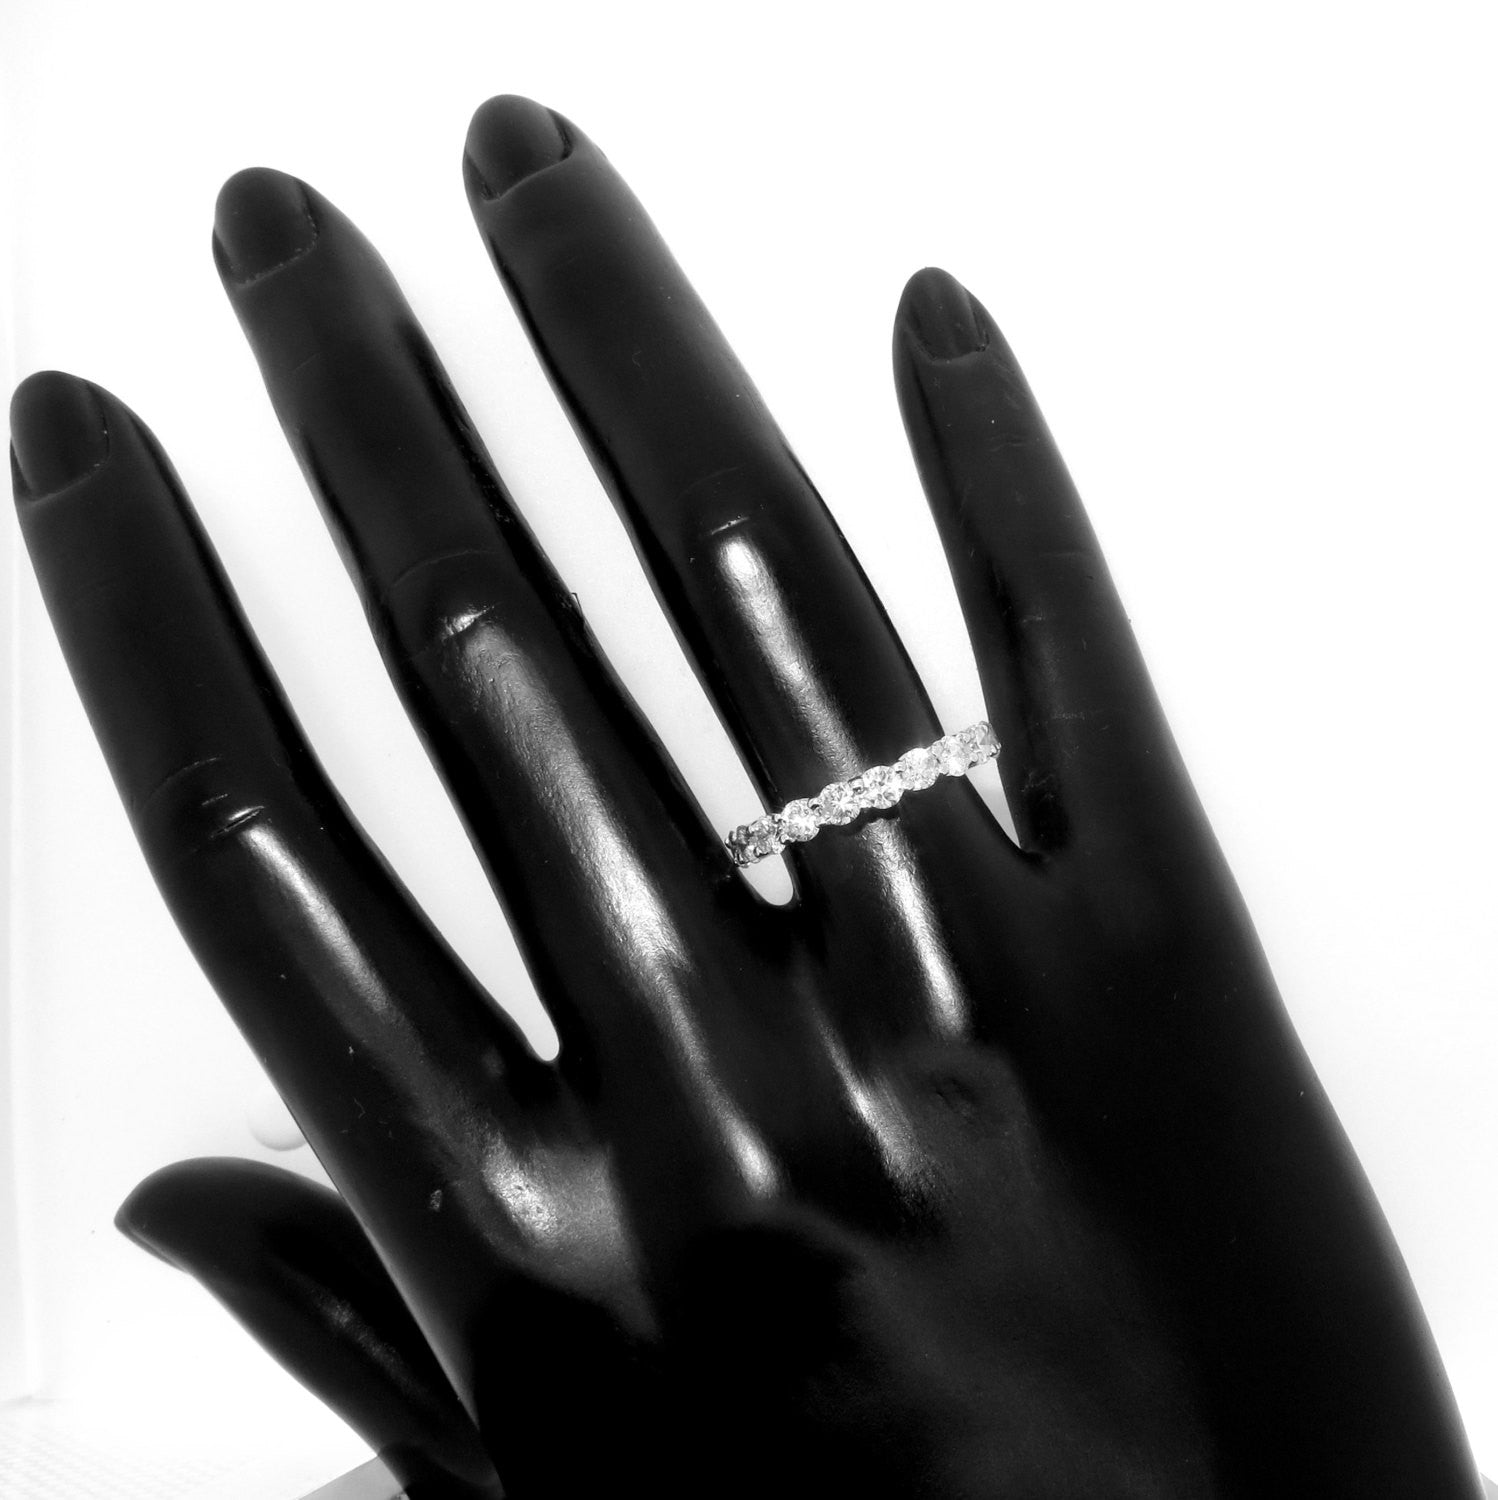 Diamond Eternity Ring, Wedding Band